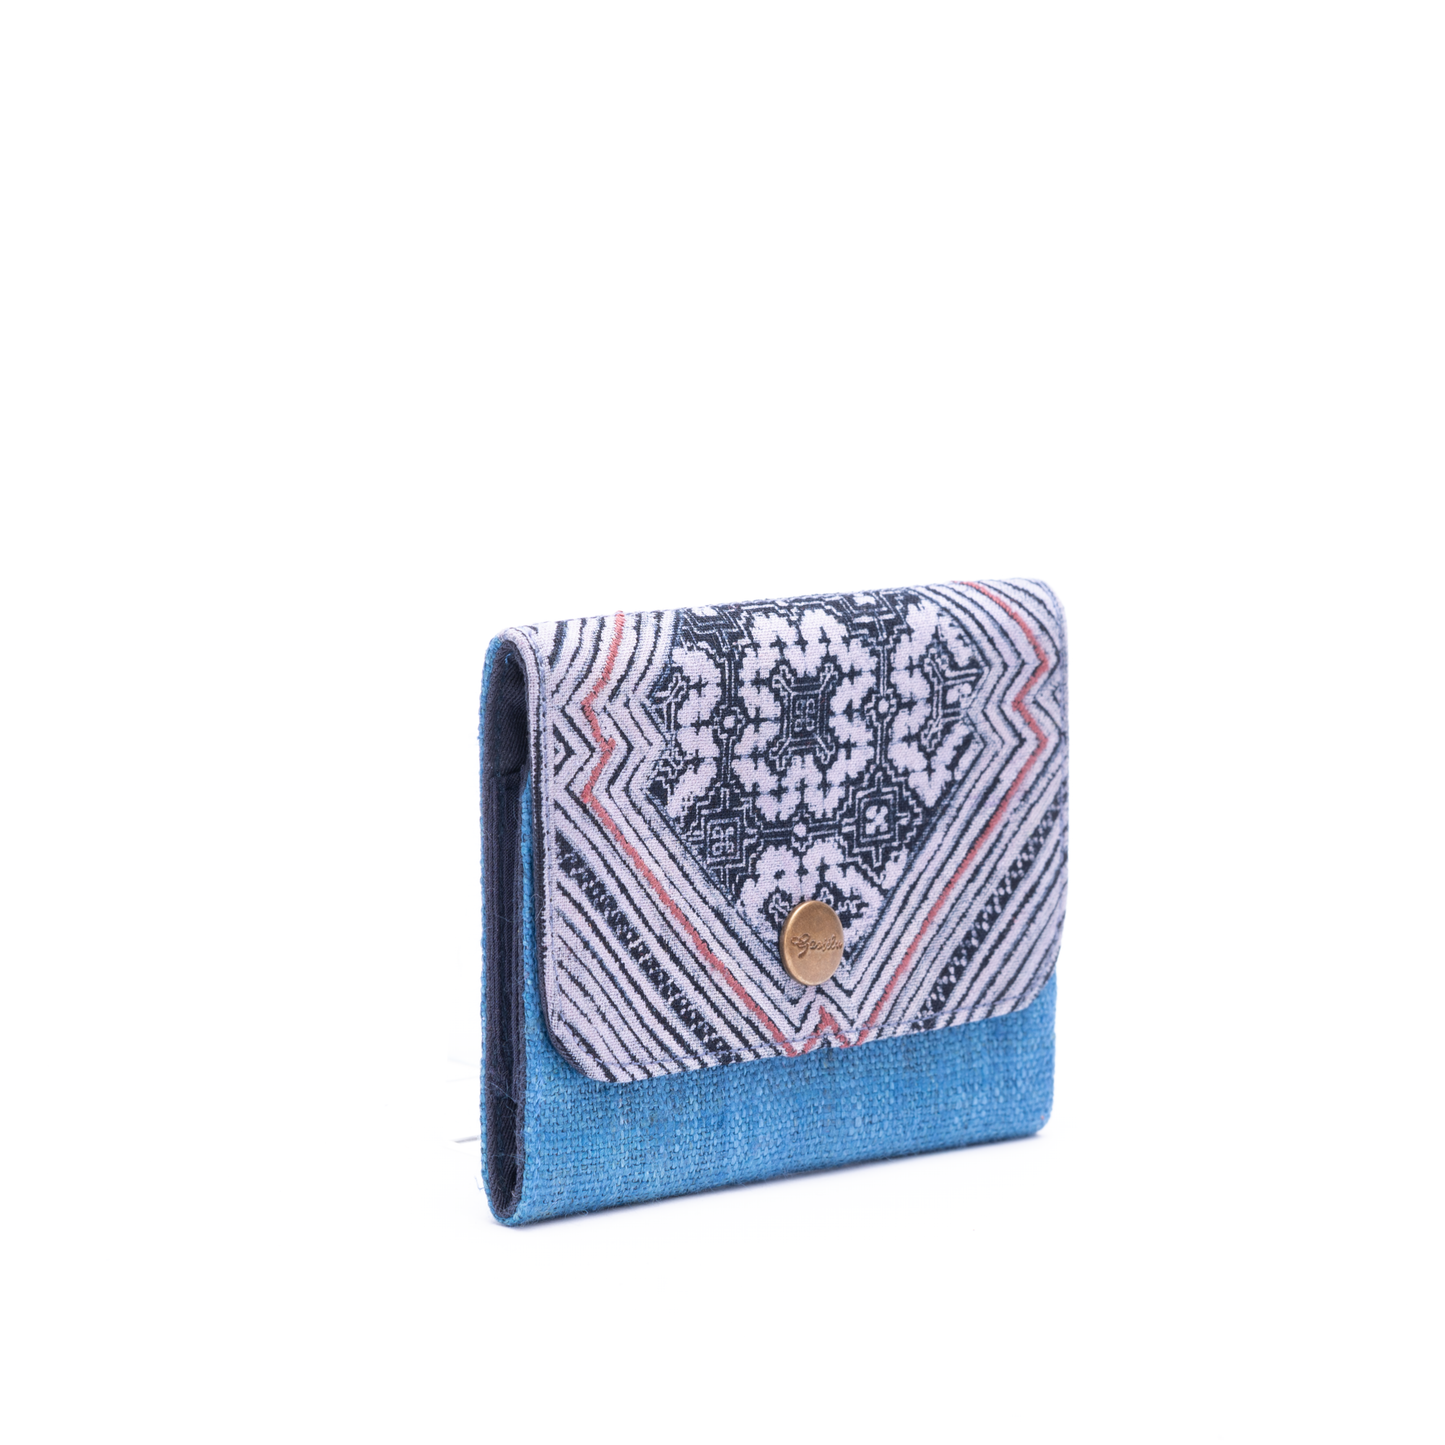 Blue Hemp card holder, Indigo Batik fabric